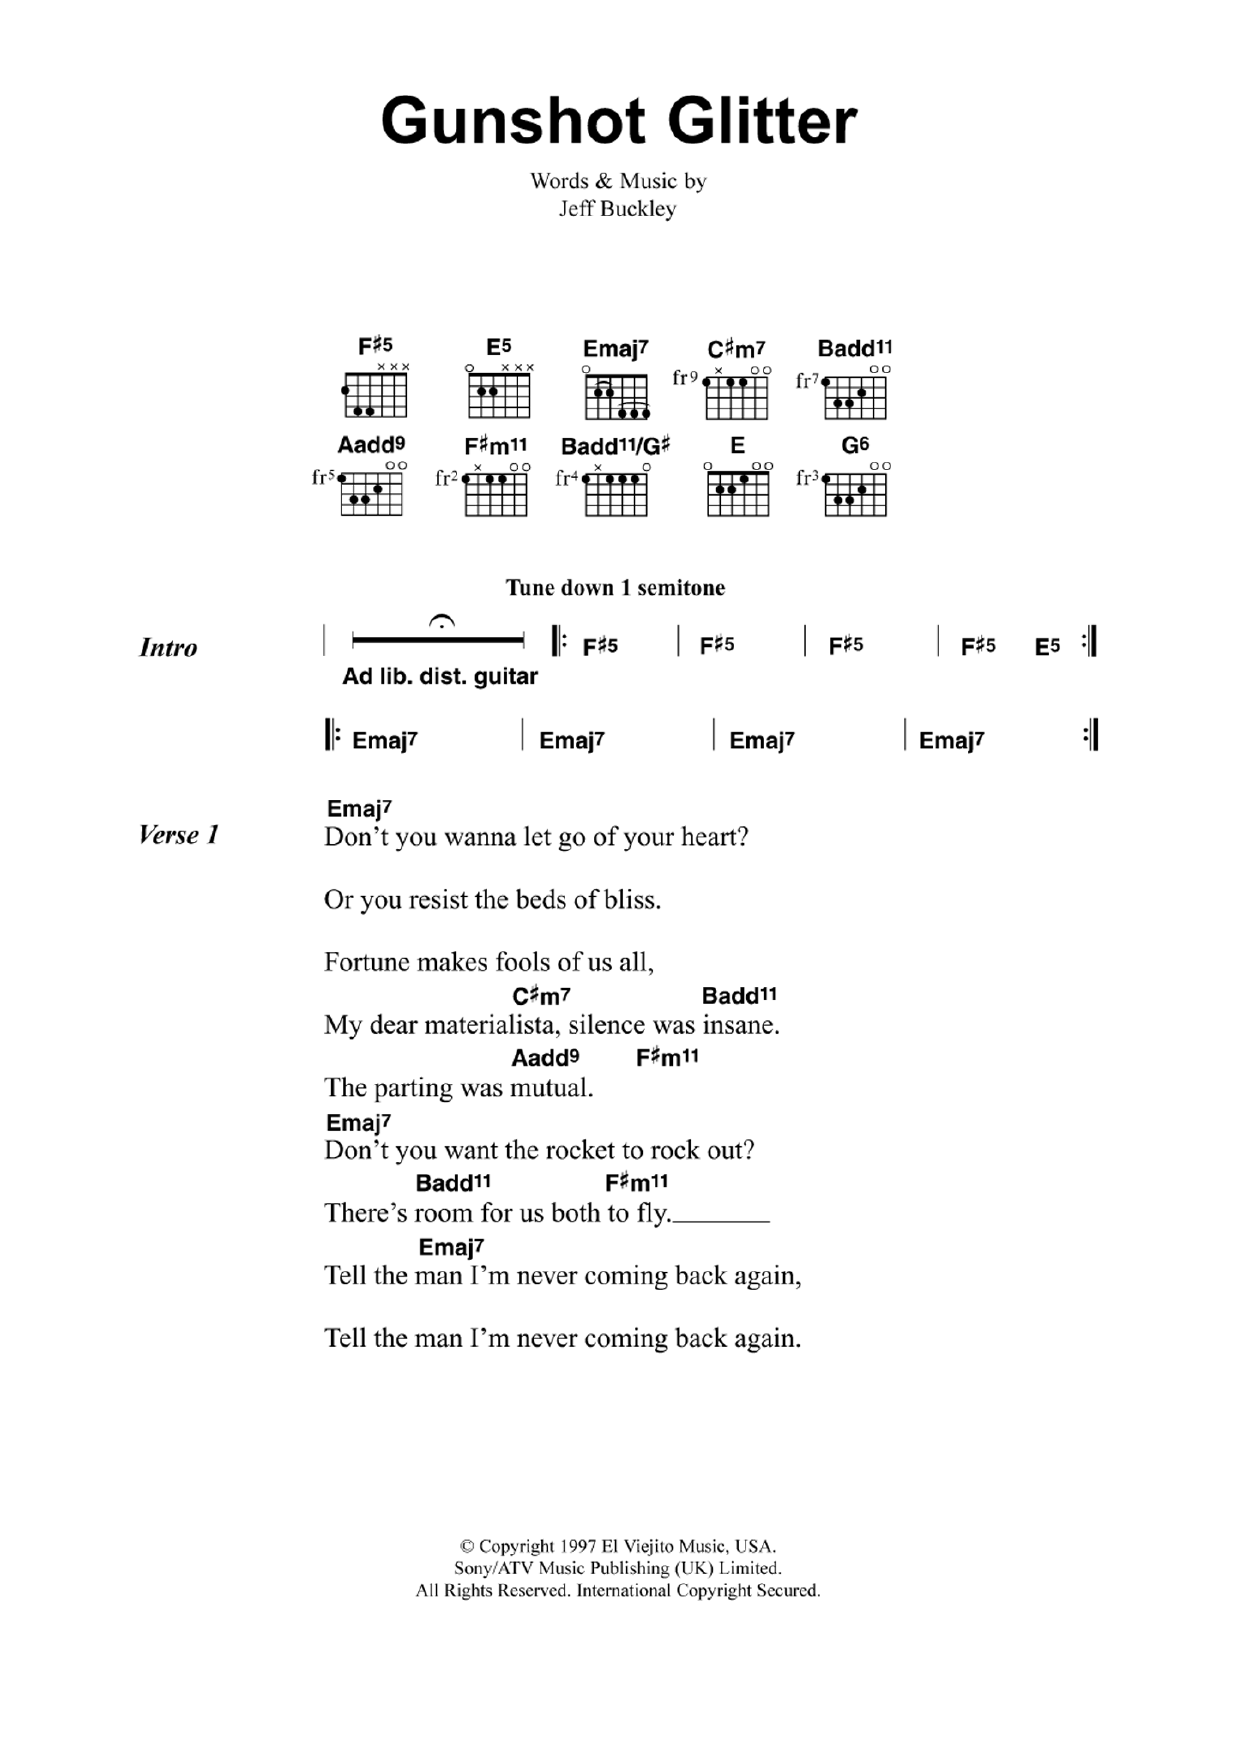 Jeff Buckley Gunshot Glitter sheet music notes and chords arranged for Guitar Chords/Lyrics